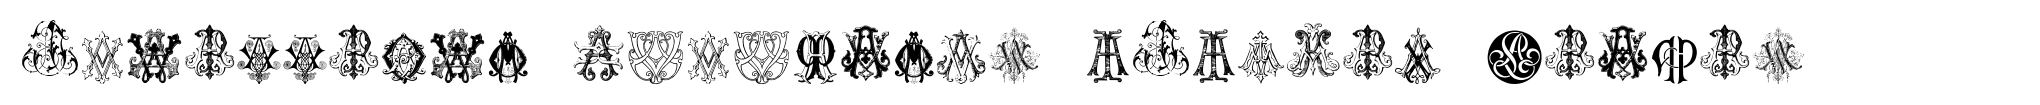 Intellecta Monograms AIAZNew Series image